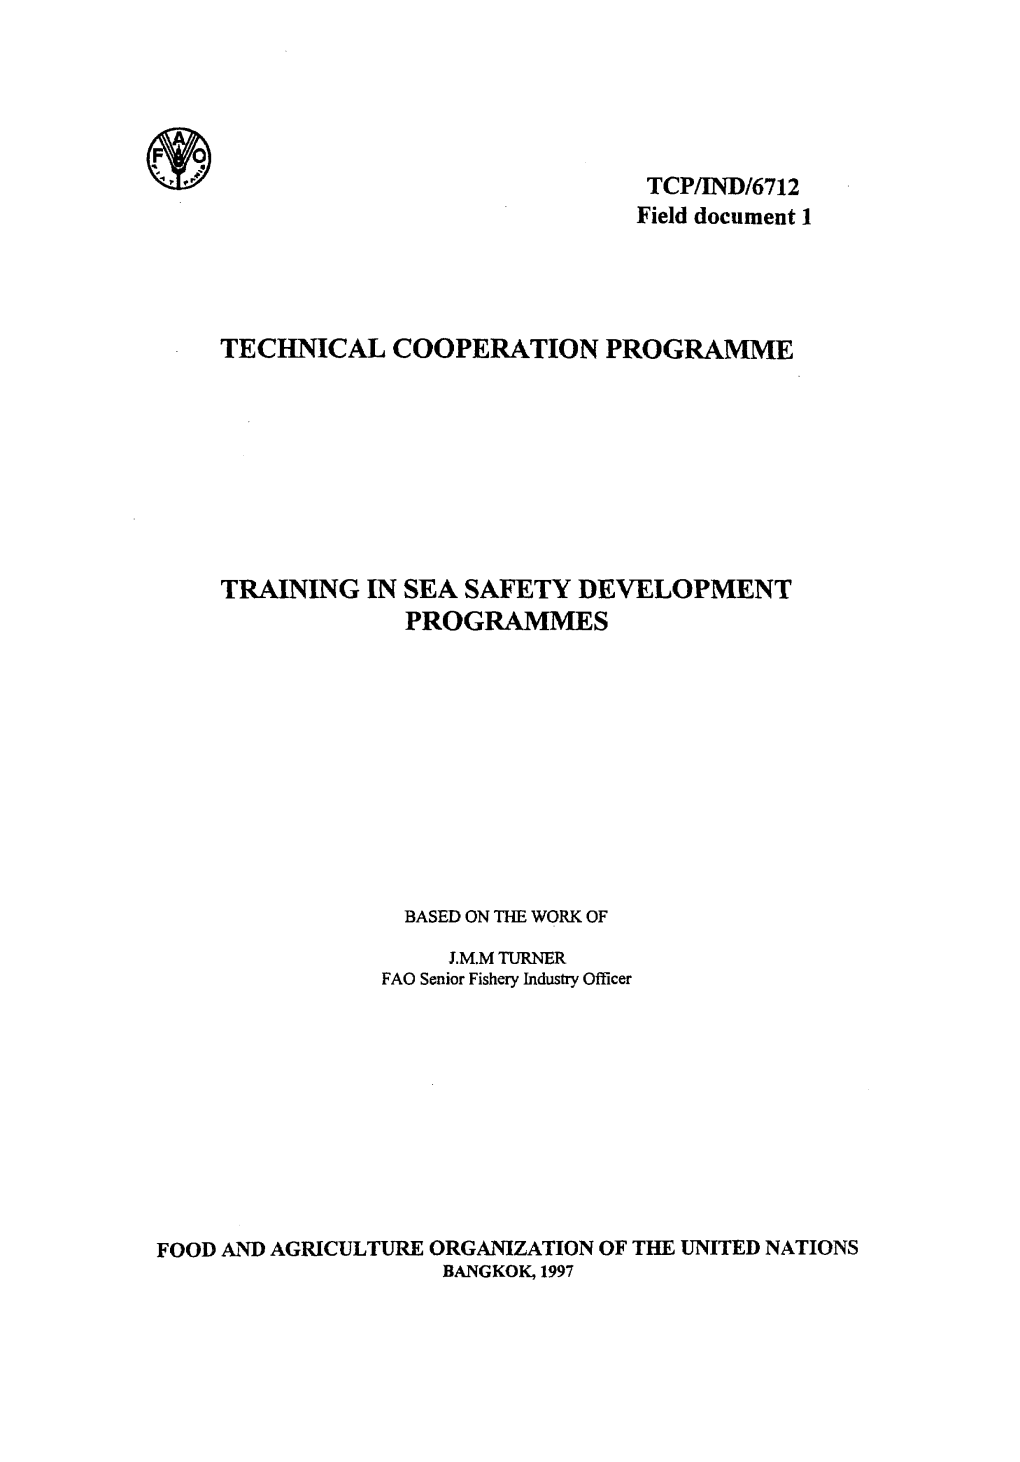 Training in Sea Safety Development Programmes